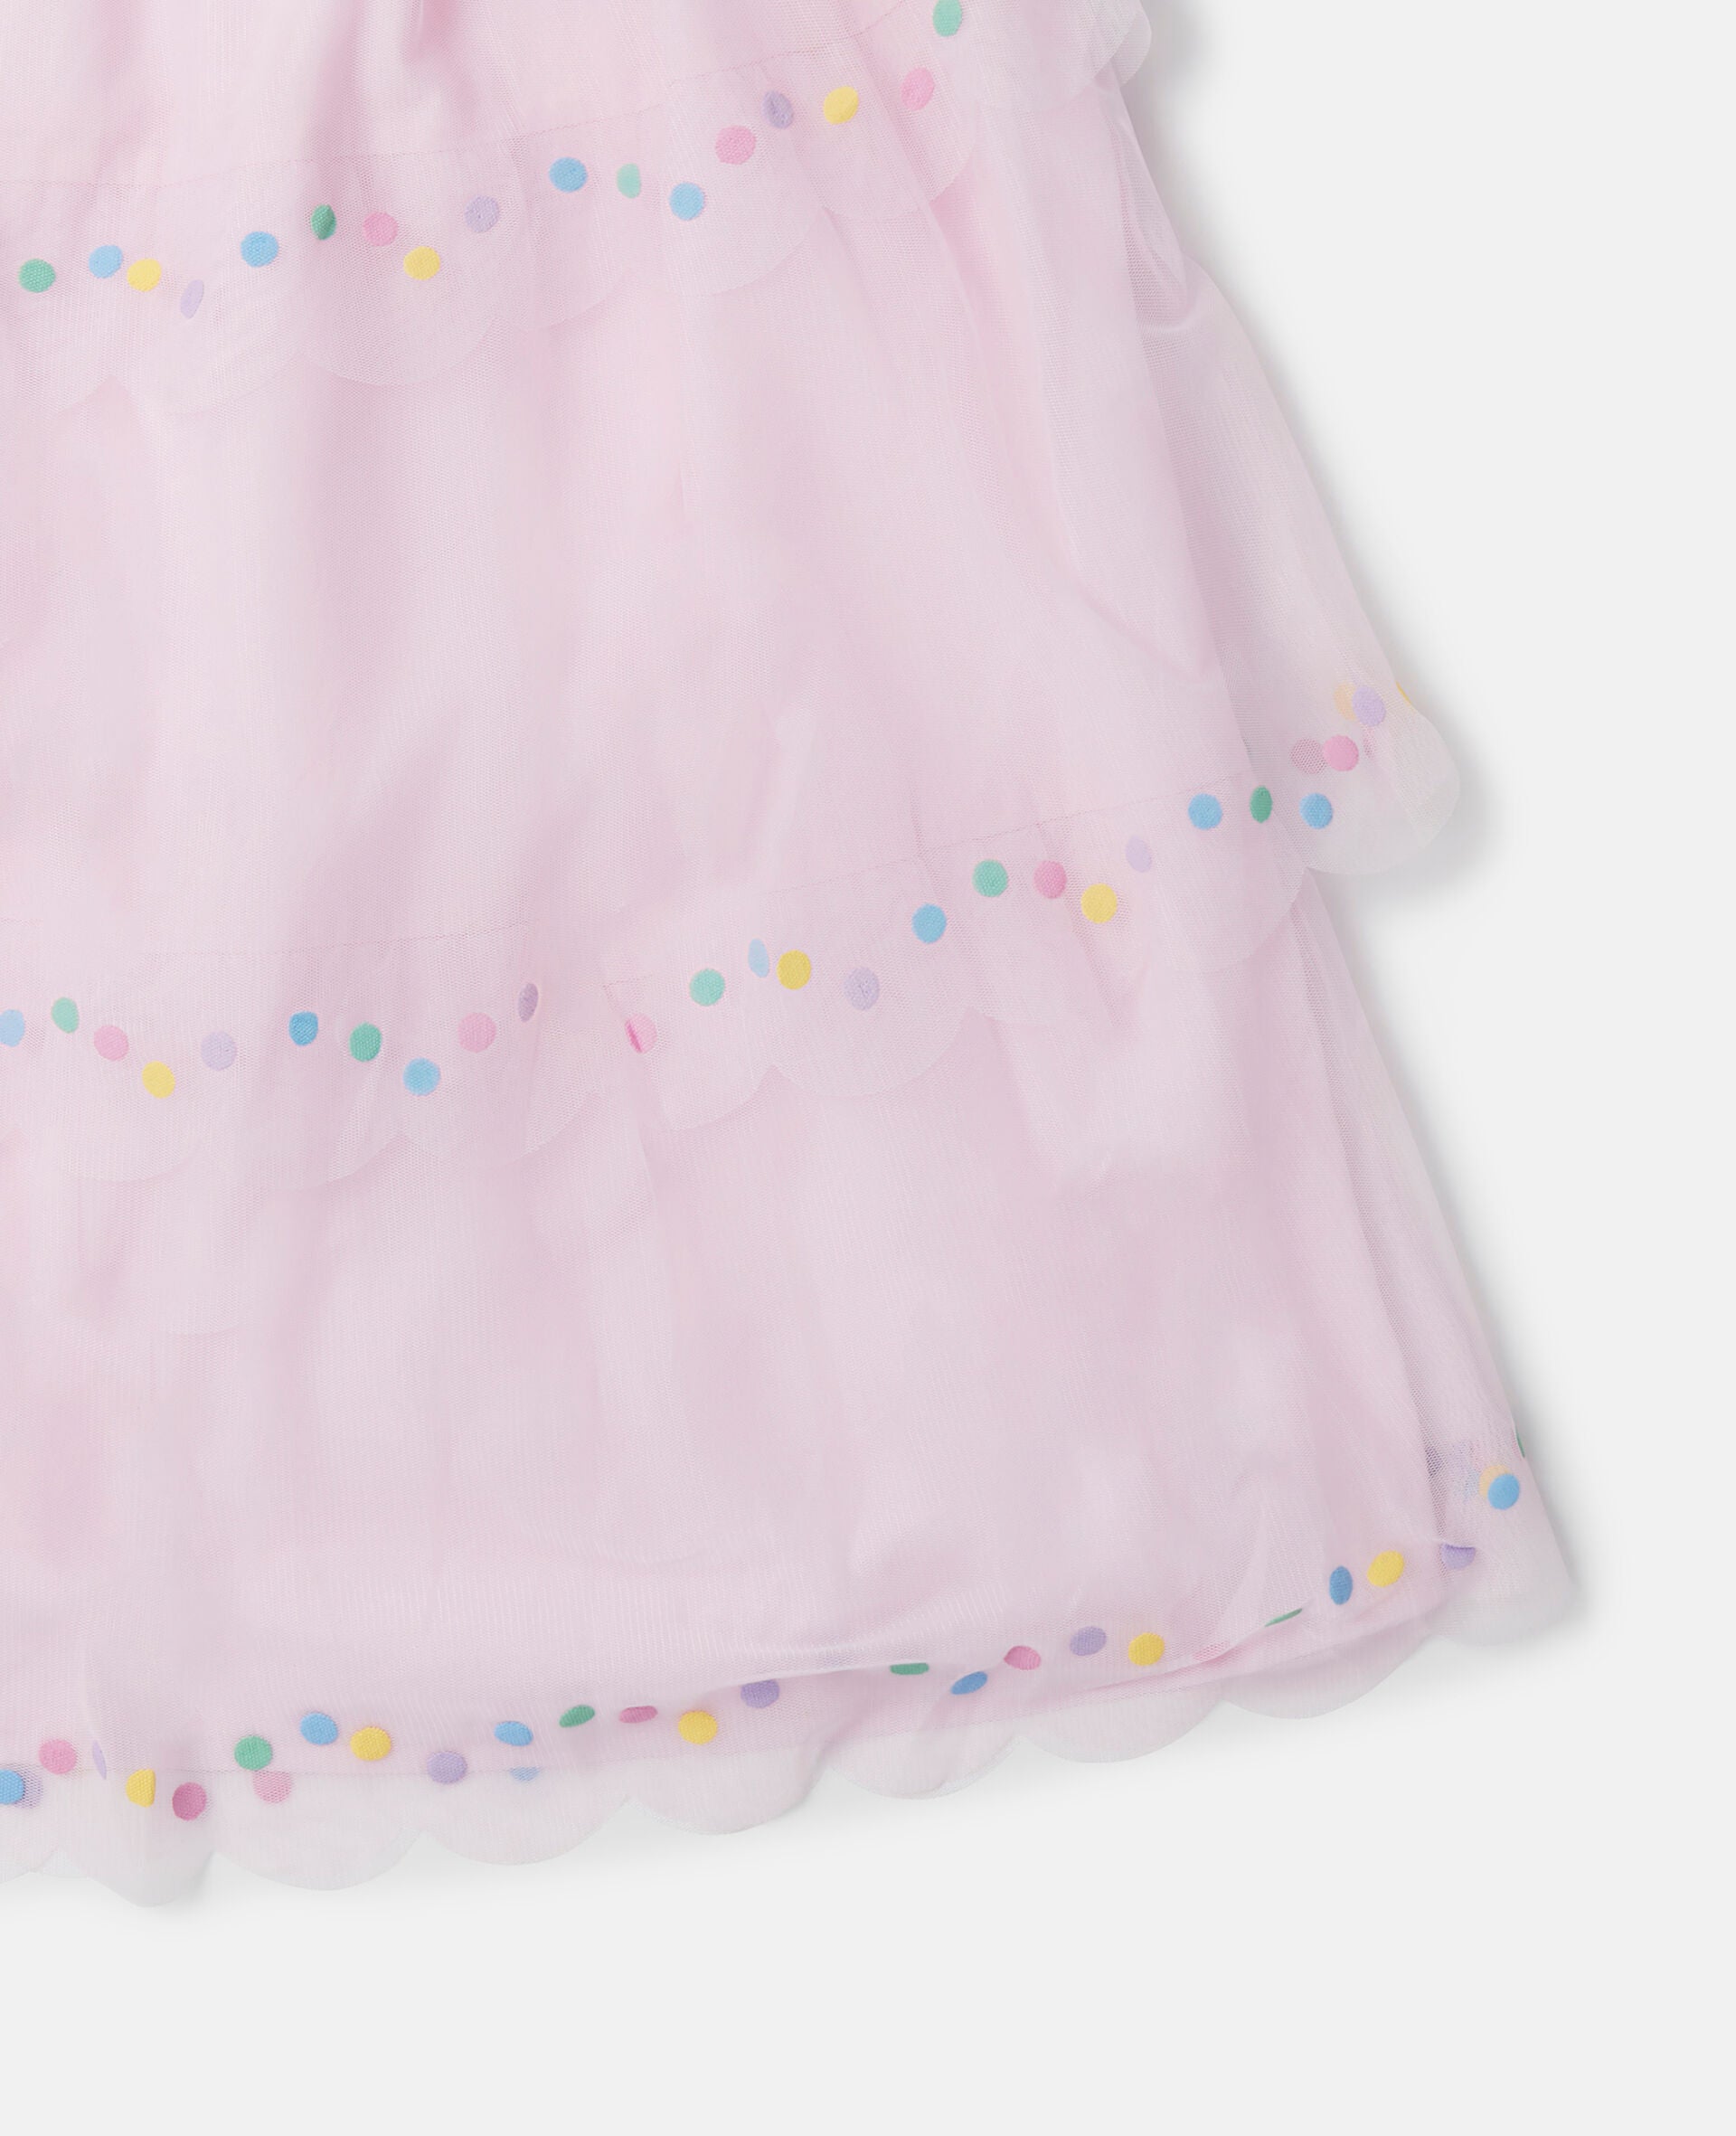 Stella McCartney - Confetti Tulle Dress (Child)